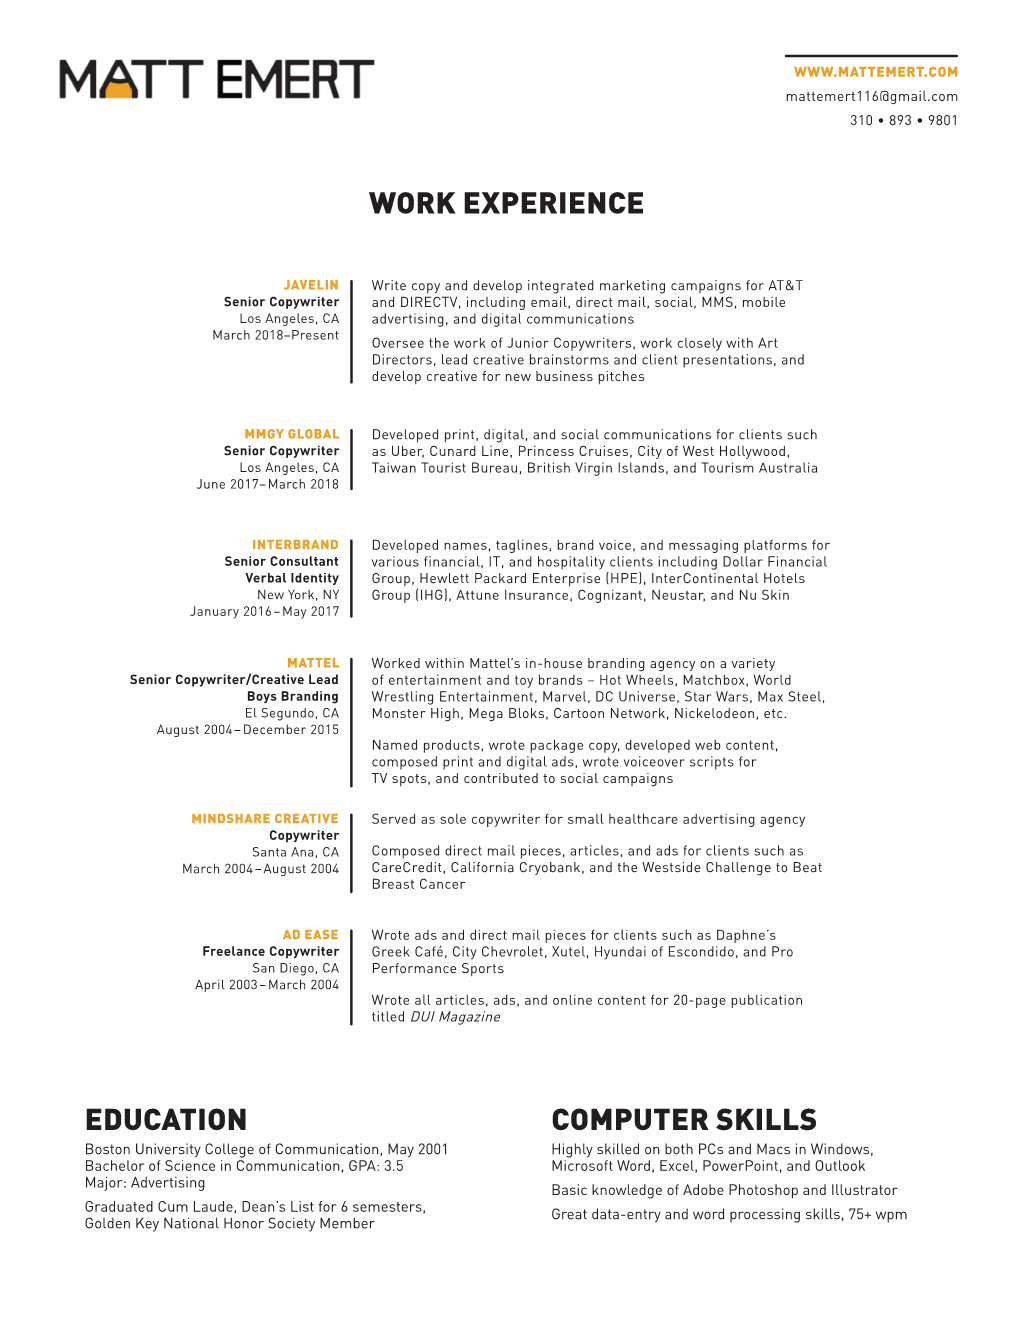 Work Experience Education Computer Skills